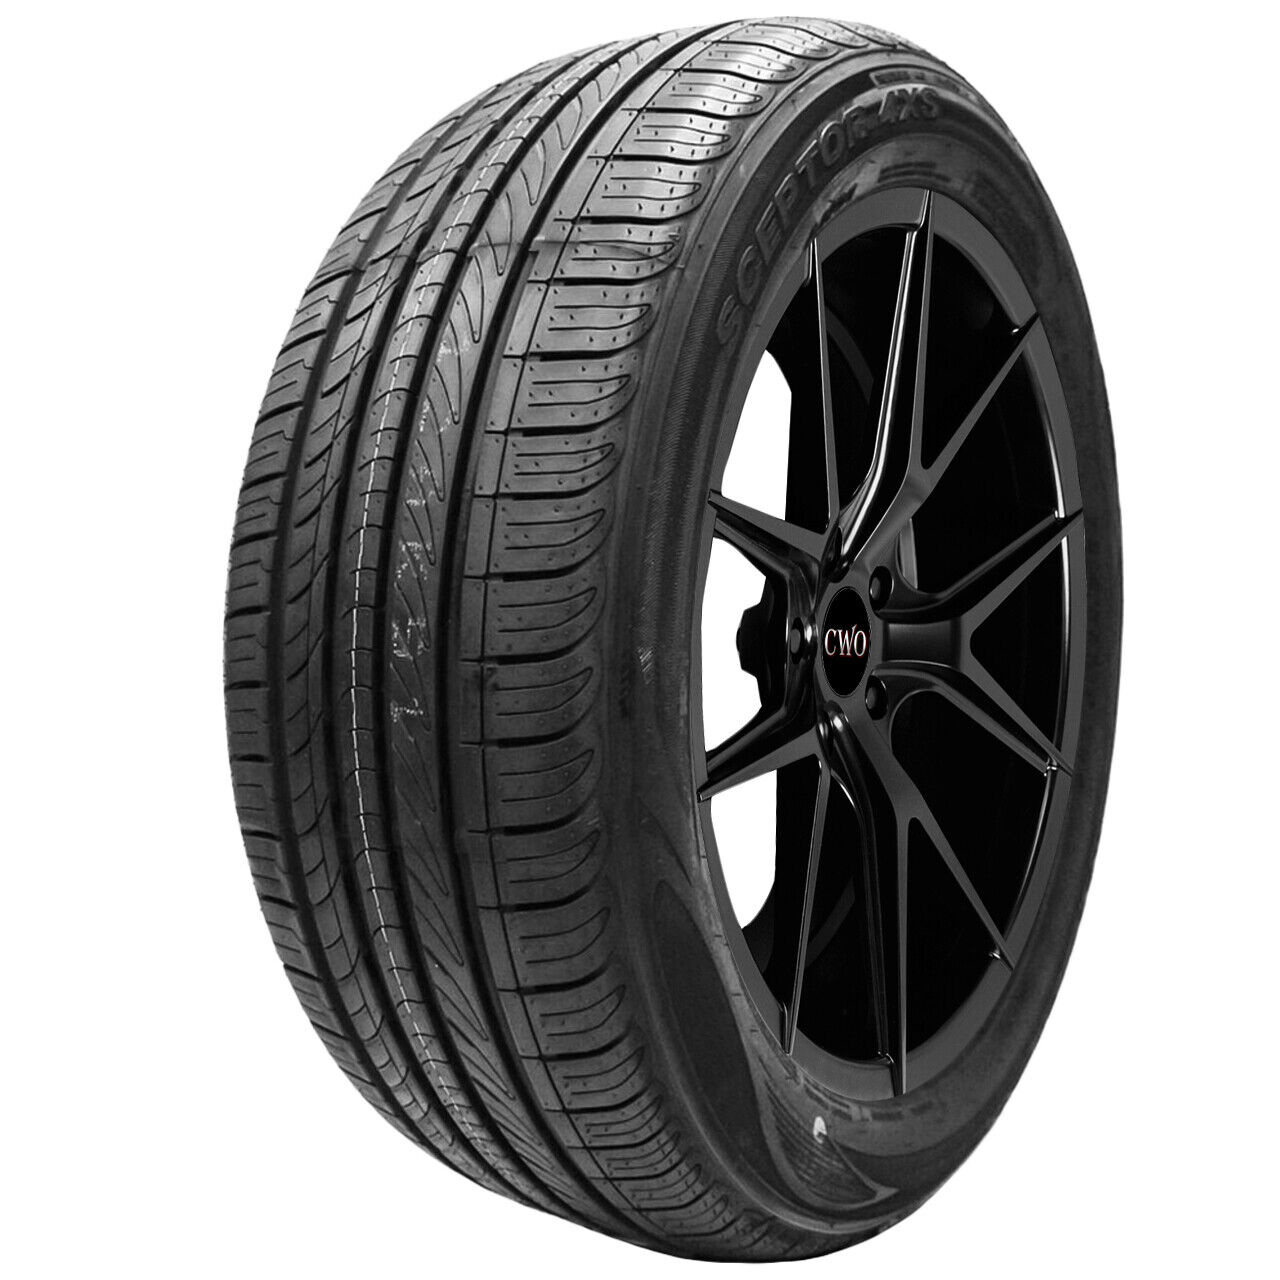 215/55R16 Sceptor 4XS 91H SL Black Wall Tire